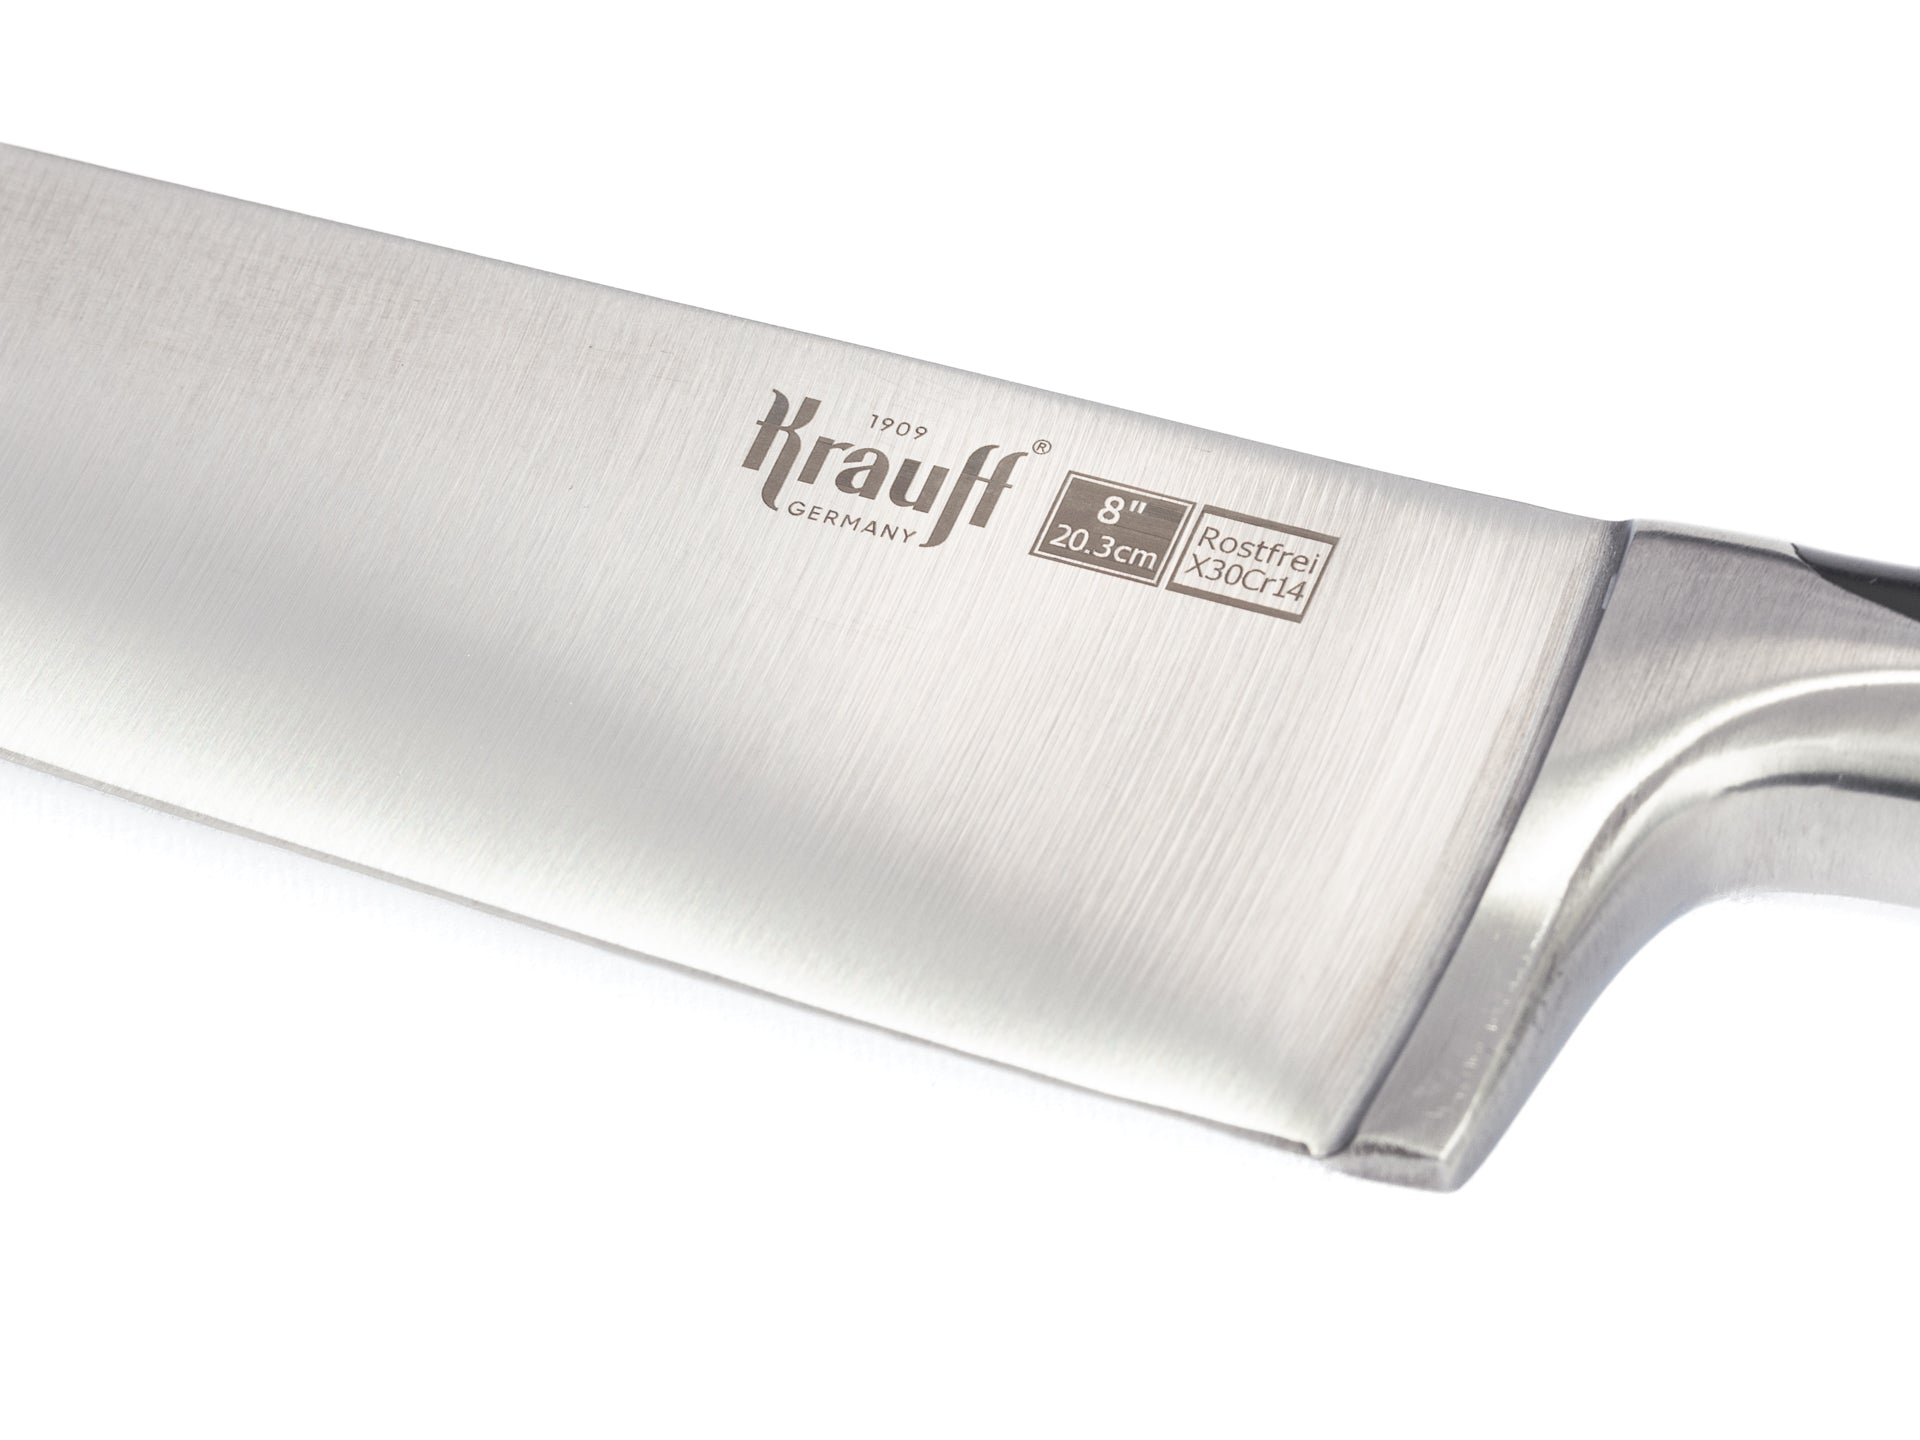 Luxus chef's knife 